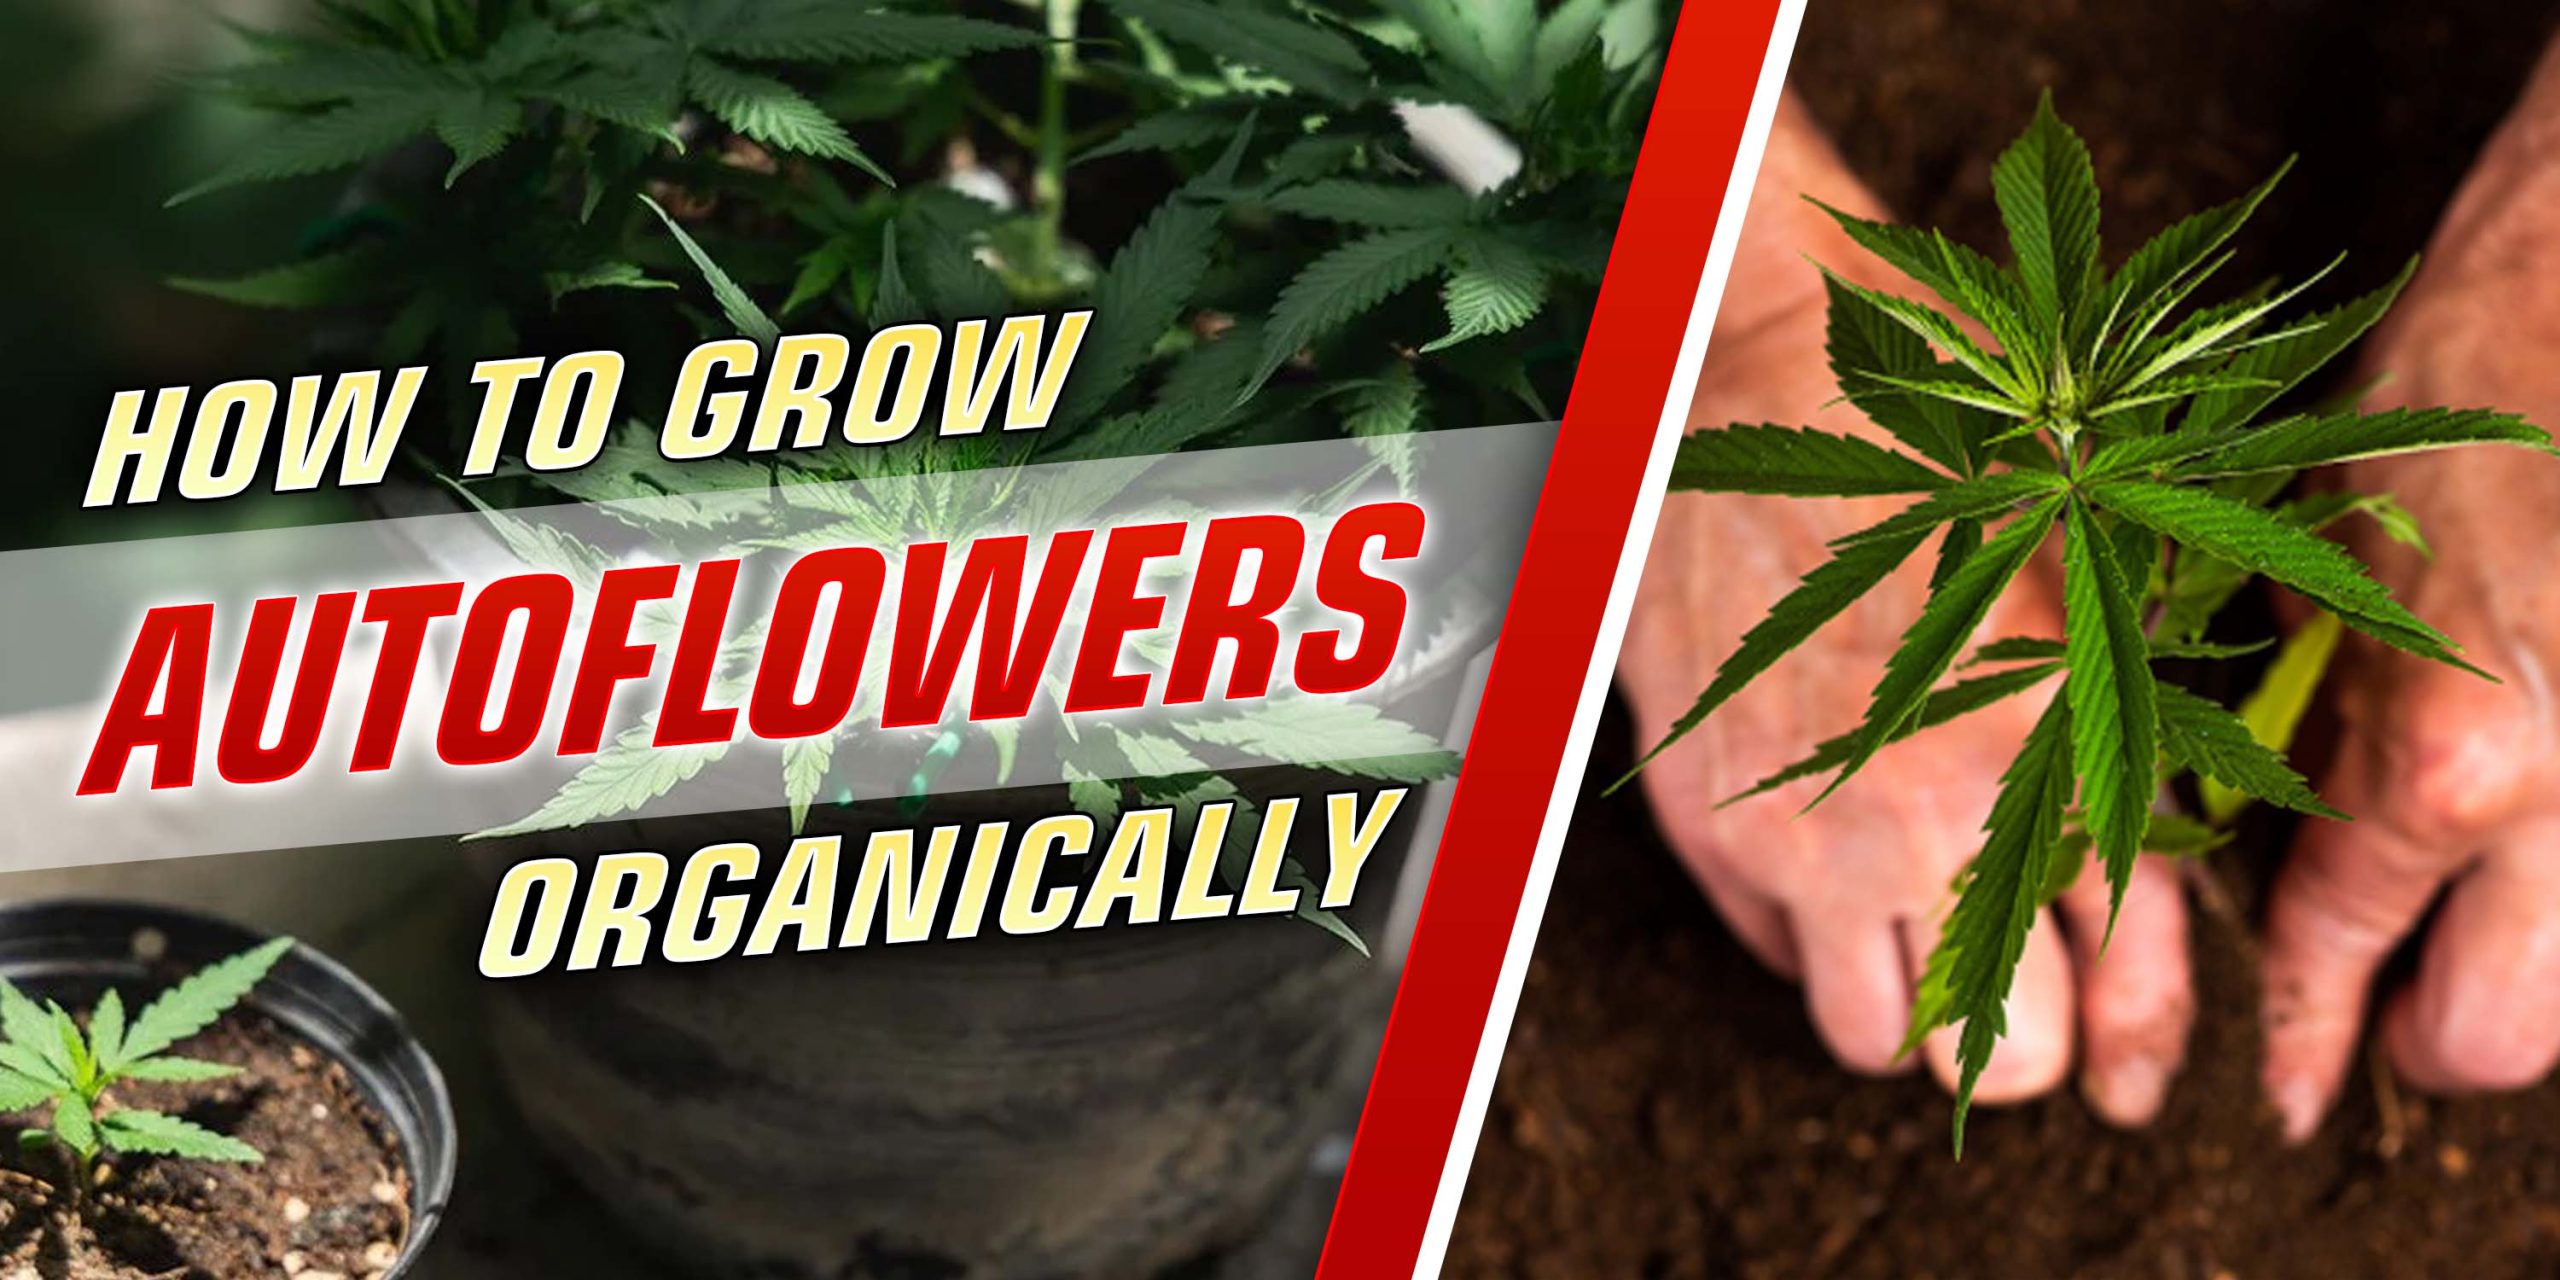 How to Grow Autoflowers Organically